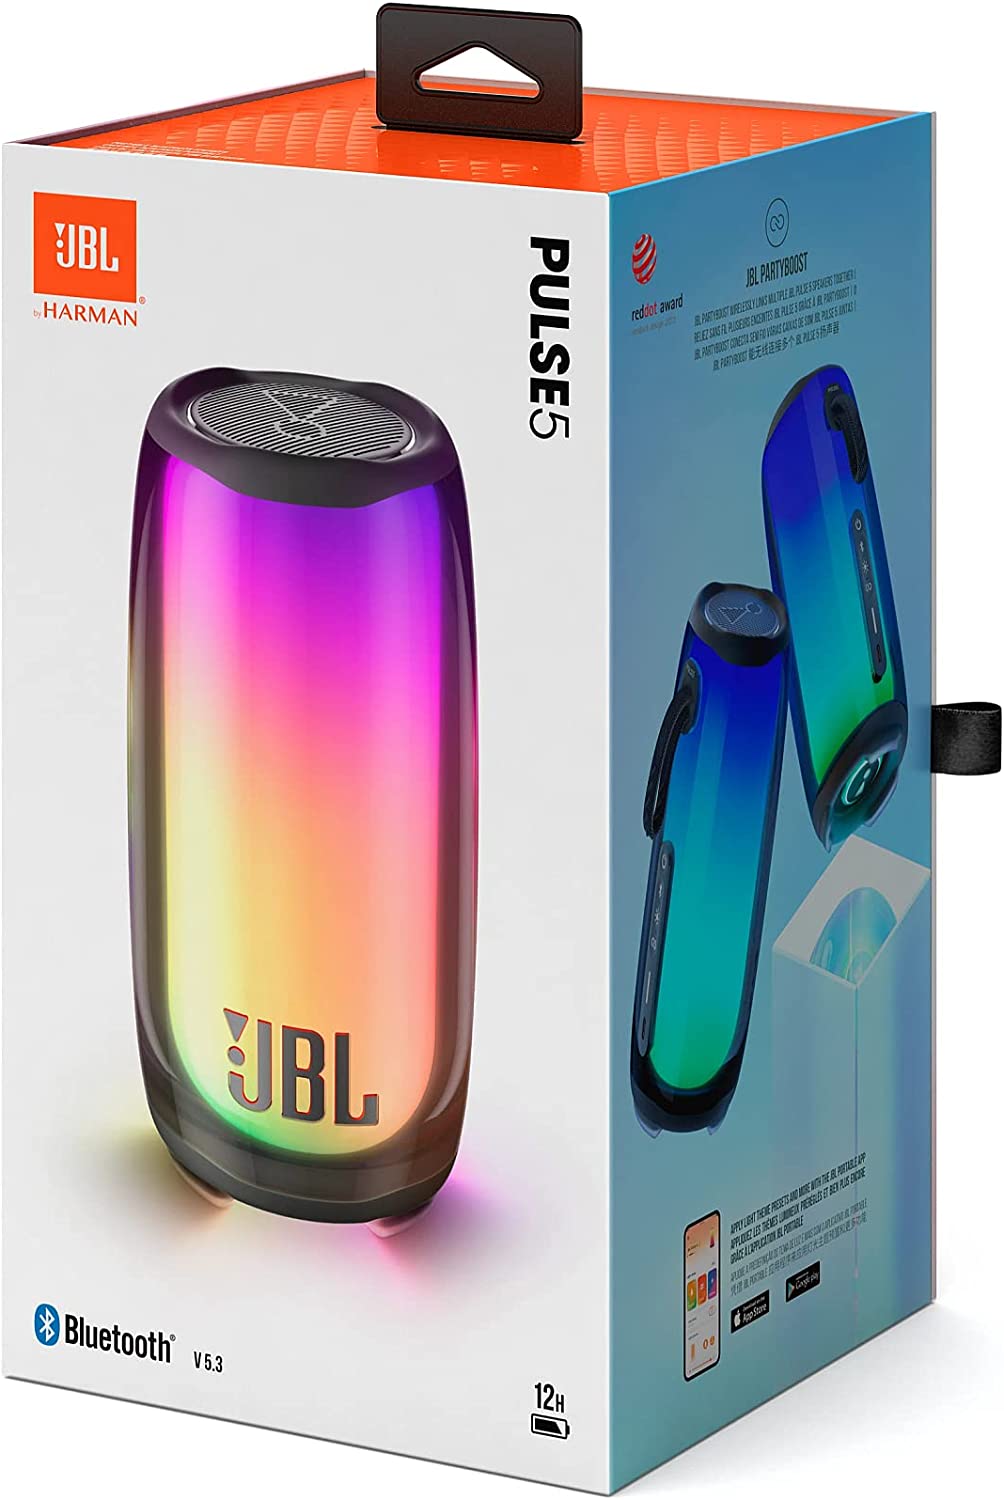 JBL Pulse 5 Portable Bluetooth Speaker with Eye-Catching 360-Degree Lightshow, JBL Original Pro Sound, IP67 Waterproof & Dustproof, 12 Hours Battery, Wireless Streaming - Black, JBLPULSE5BLK